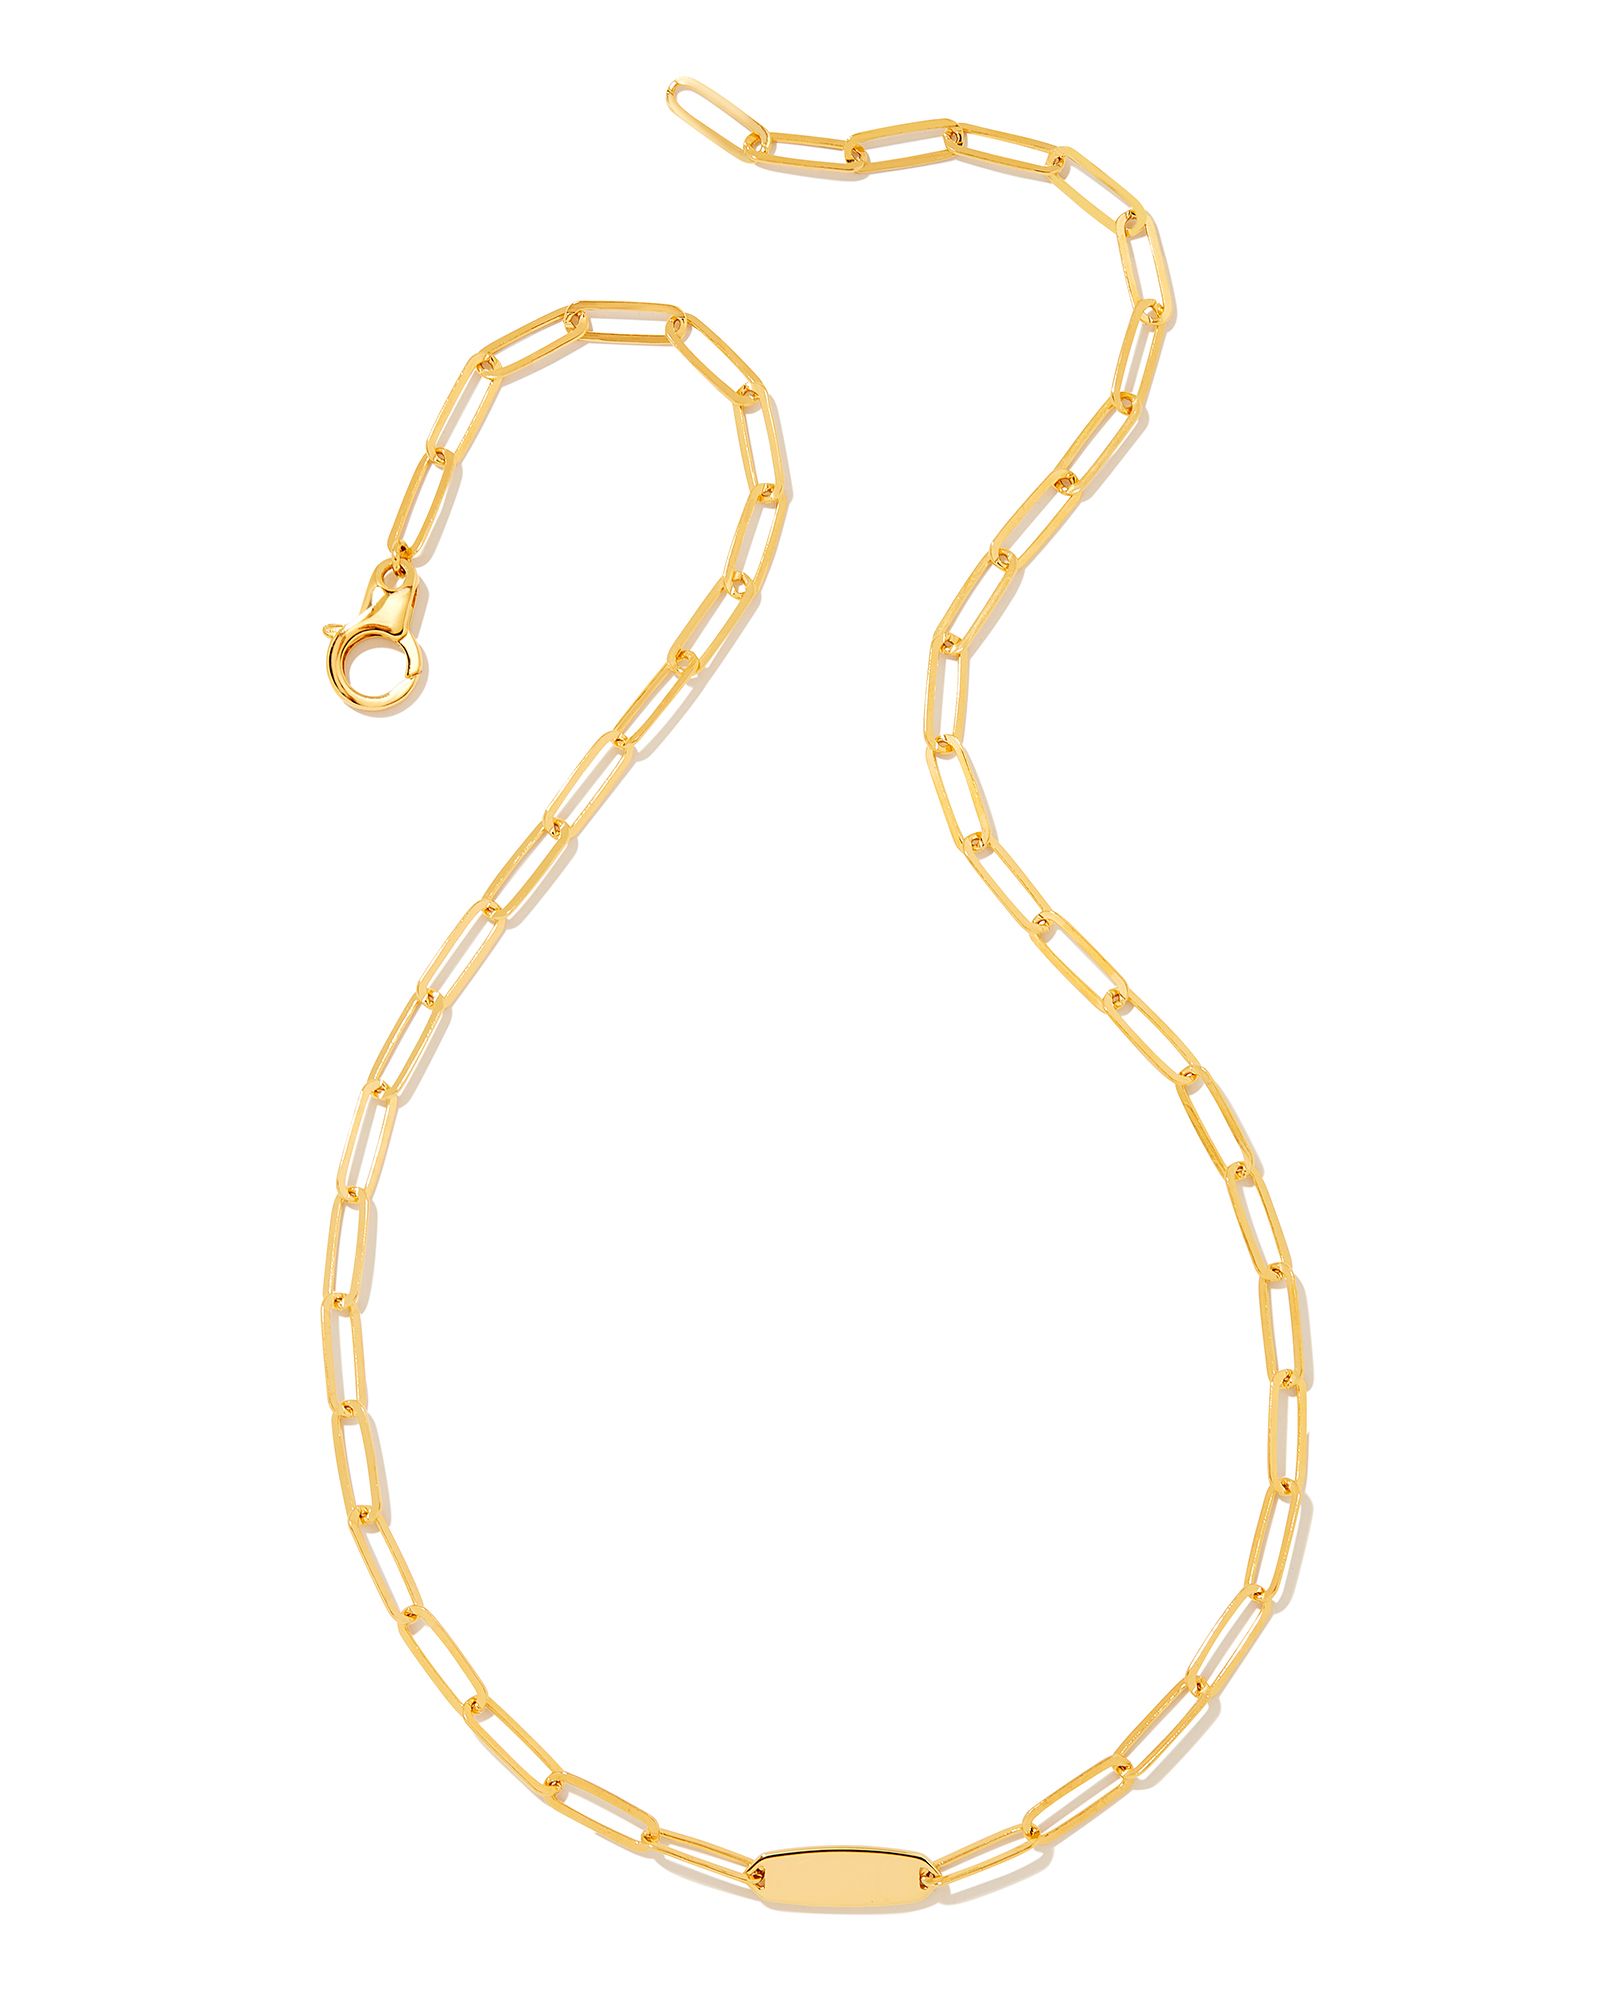 Marlee Paperclip Chain Necklace in 18k Gold Vermeil | Kendra Scott | Kendra Scott